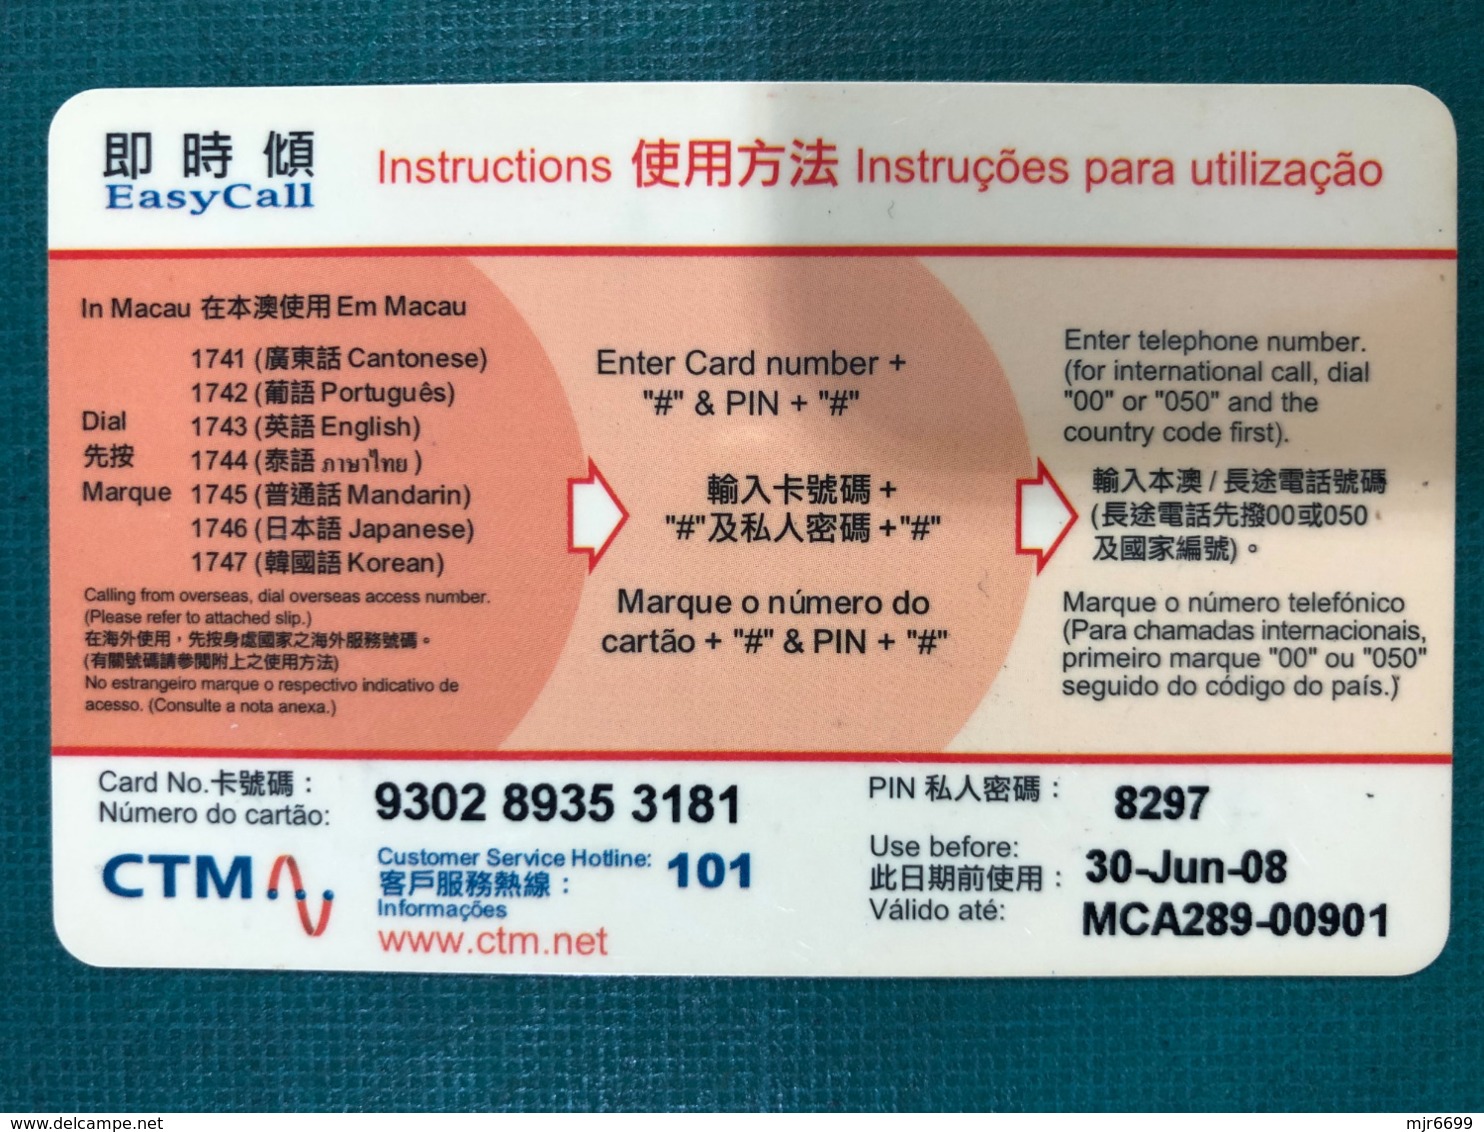 MACAU-CTM 2008 EASY CALL TELEPHONE CARD, (AIR MACAU SPONSER) - Macao